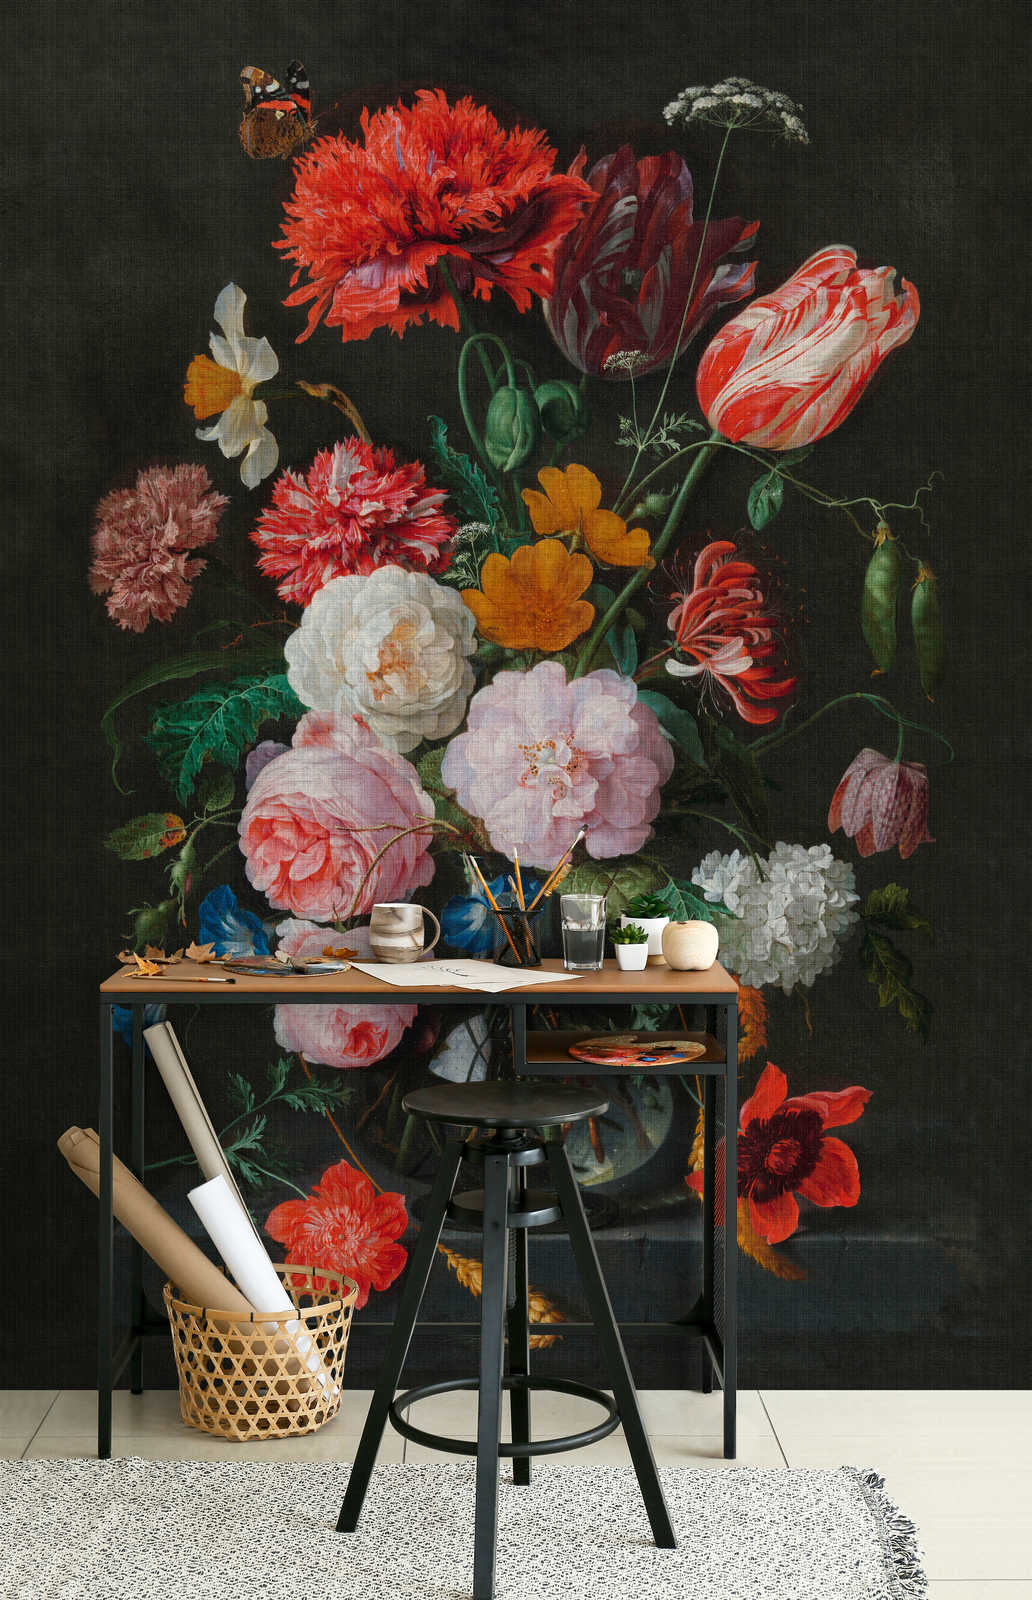             Estudio de Artistas 4 - Mural Flores Naturaleza Muerta con Rosas
        